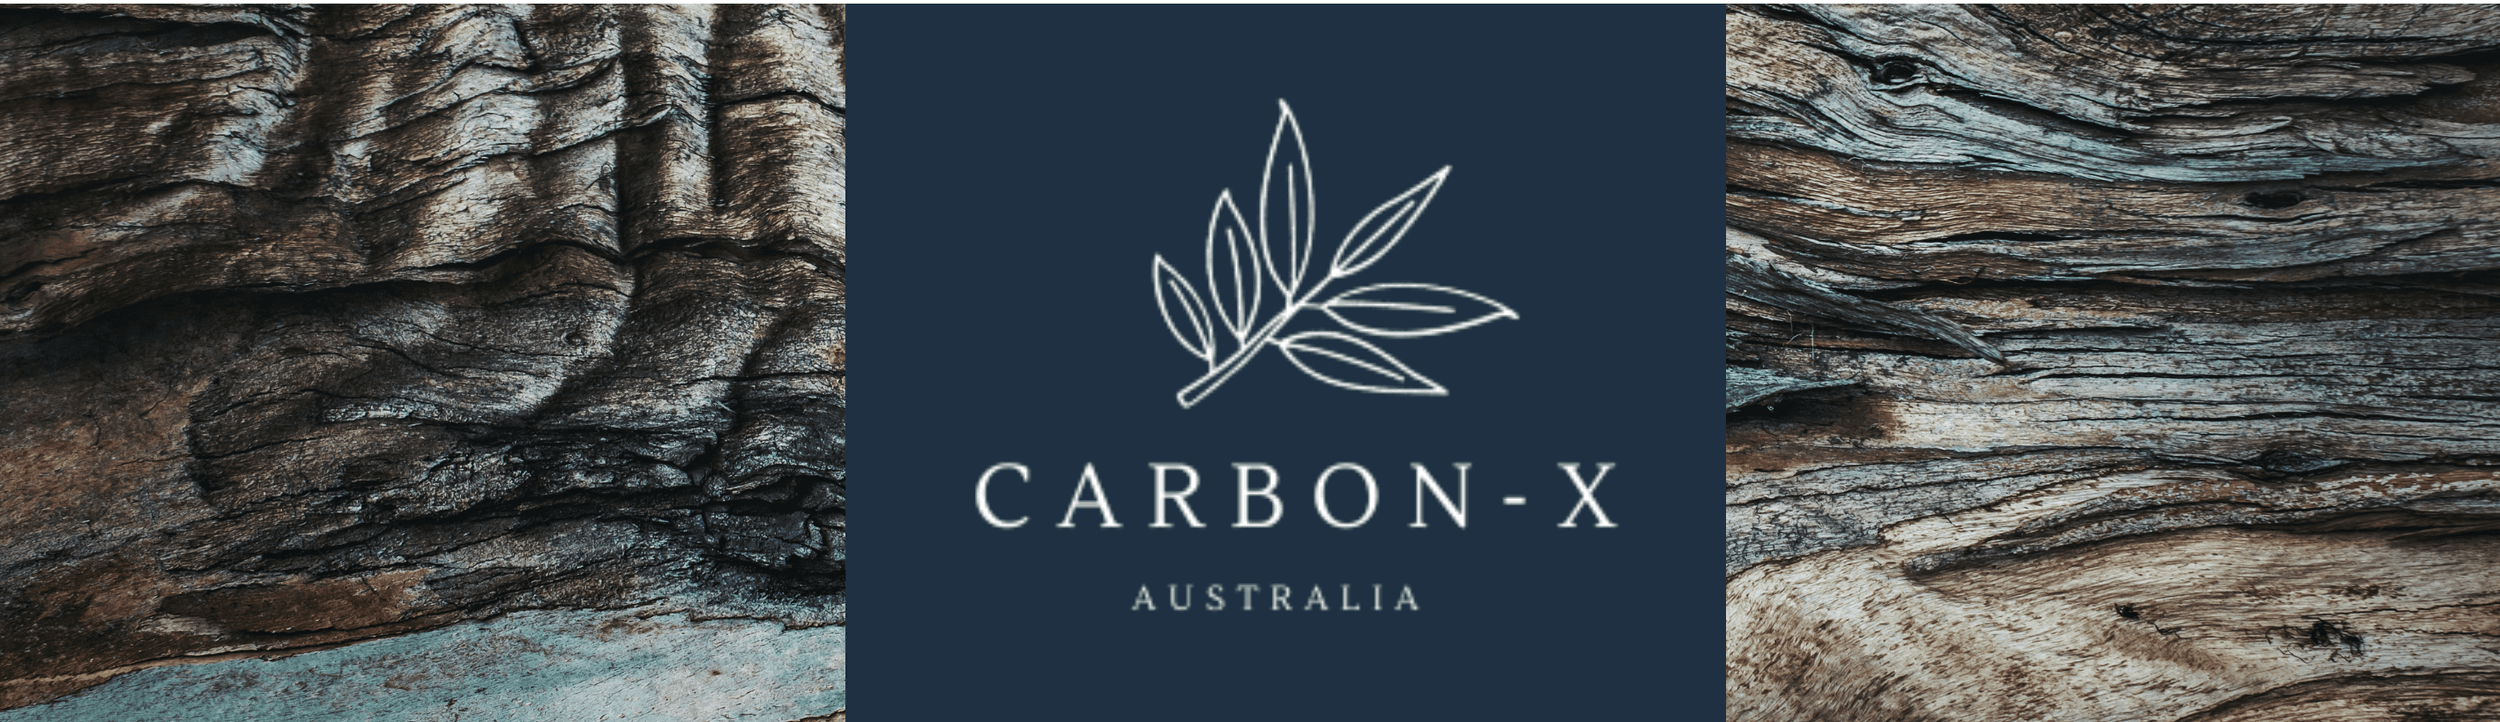 Product The Solution | Carbon-X Australia image